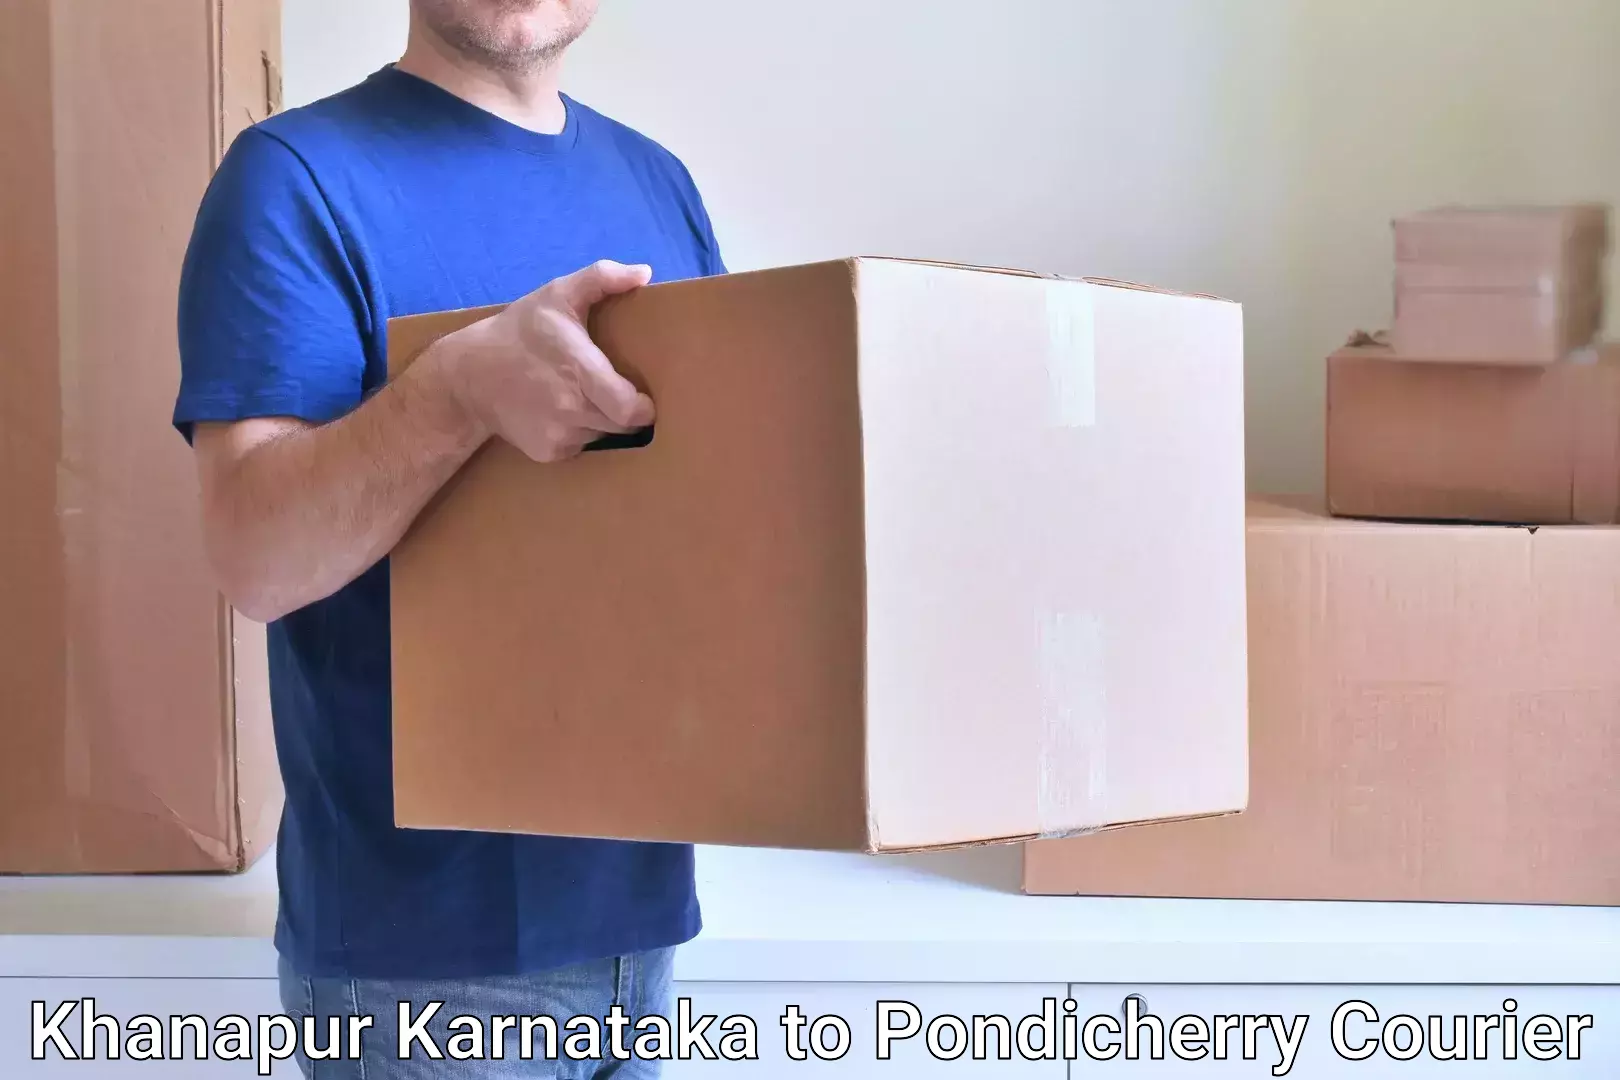 Smart parcel tracking Khanapur Karnataka to Pondicherry